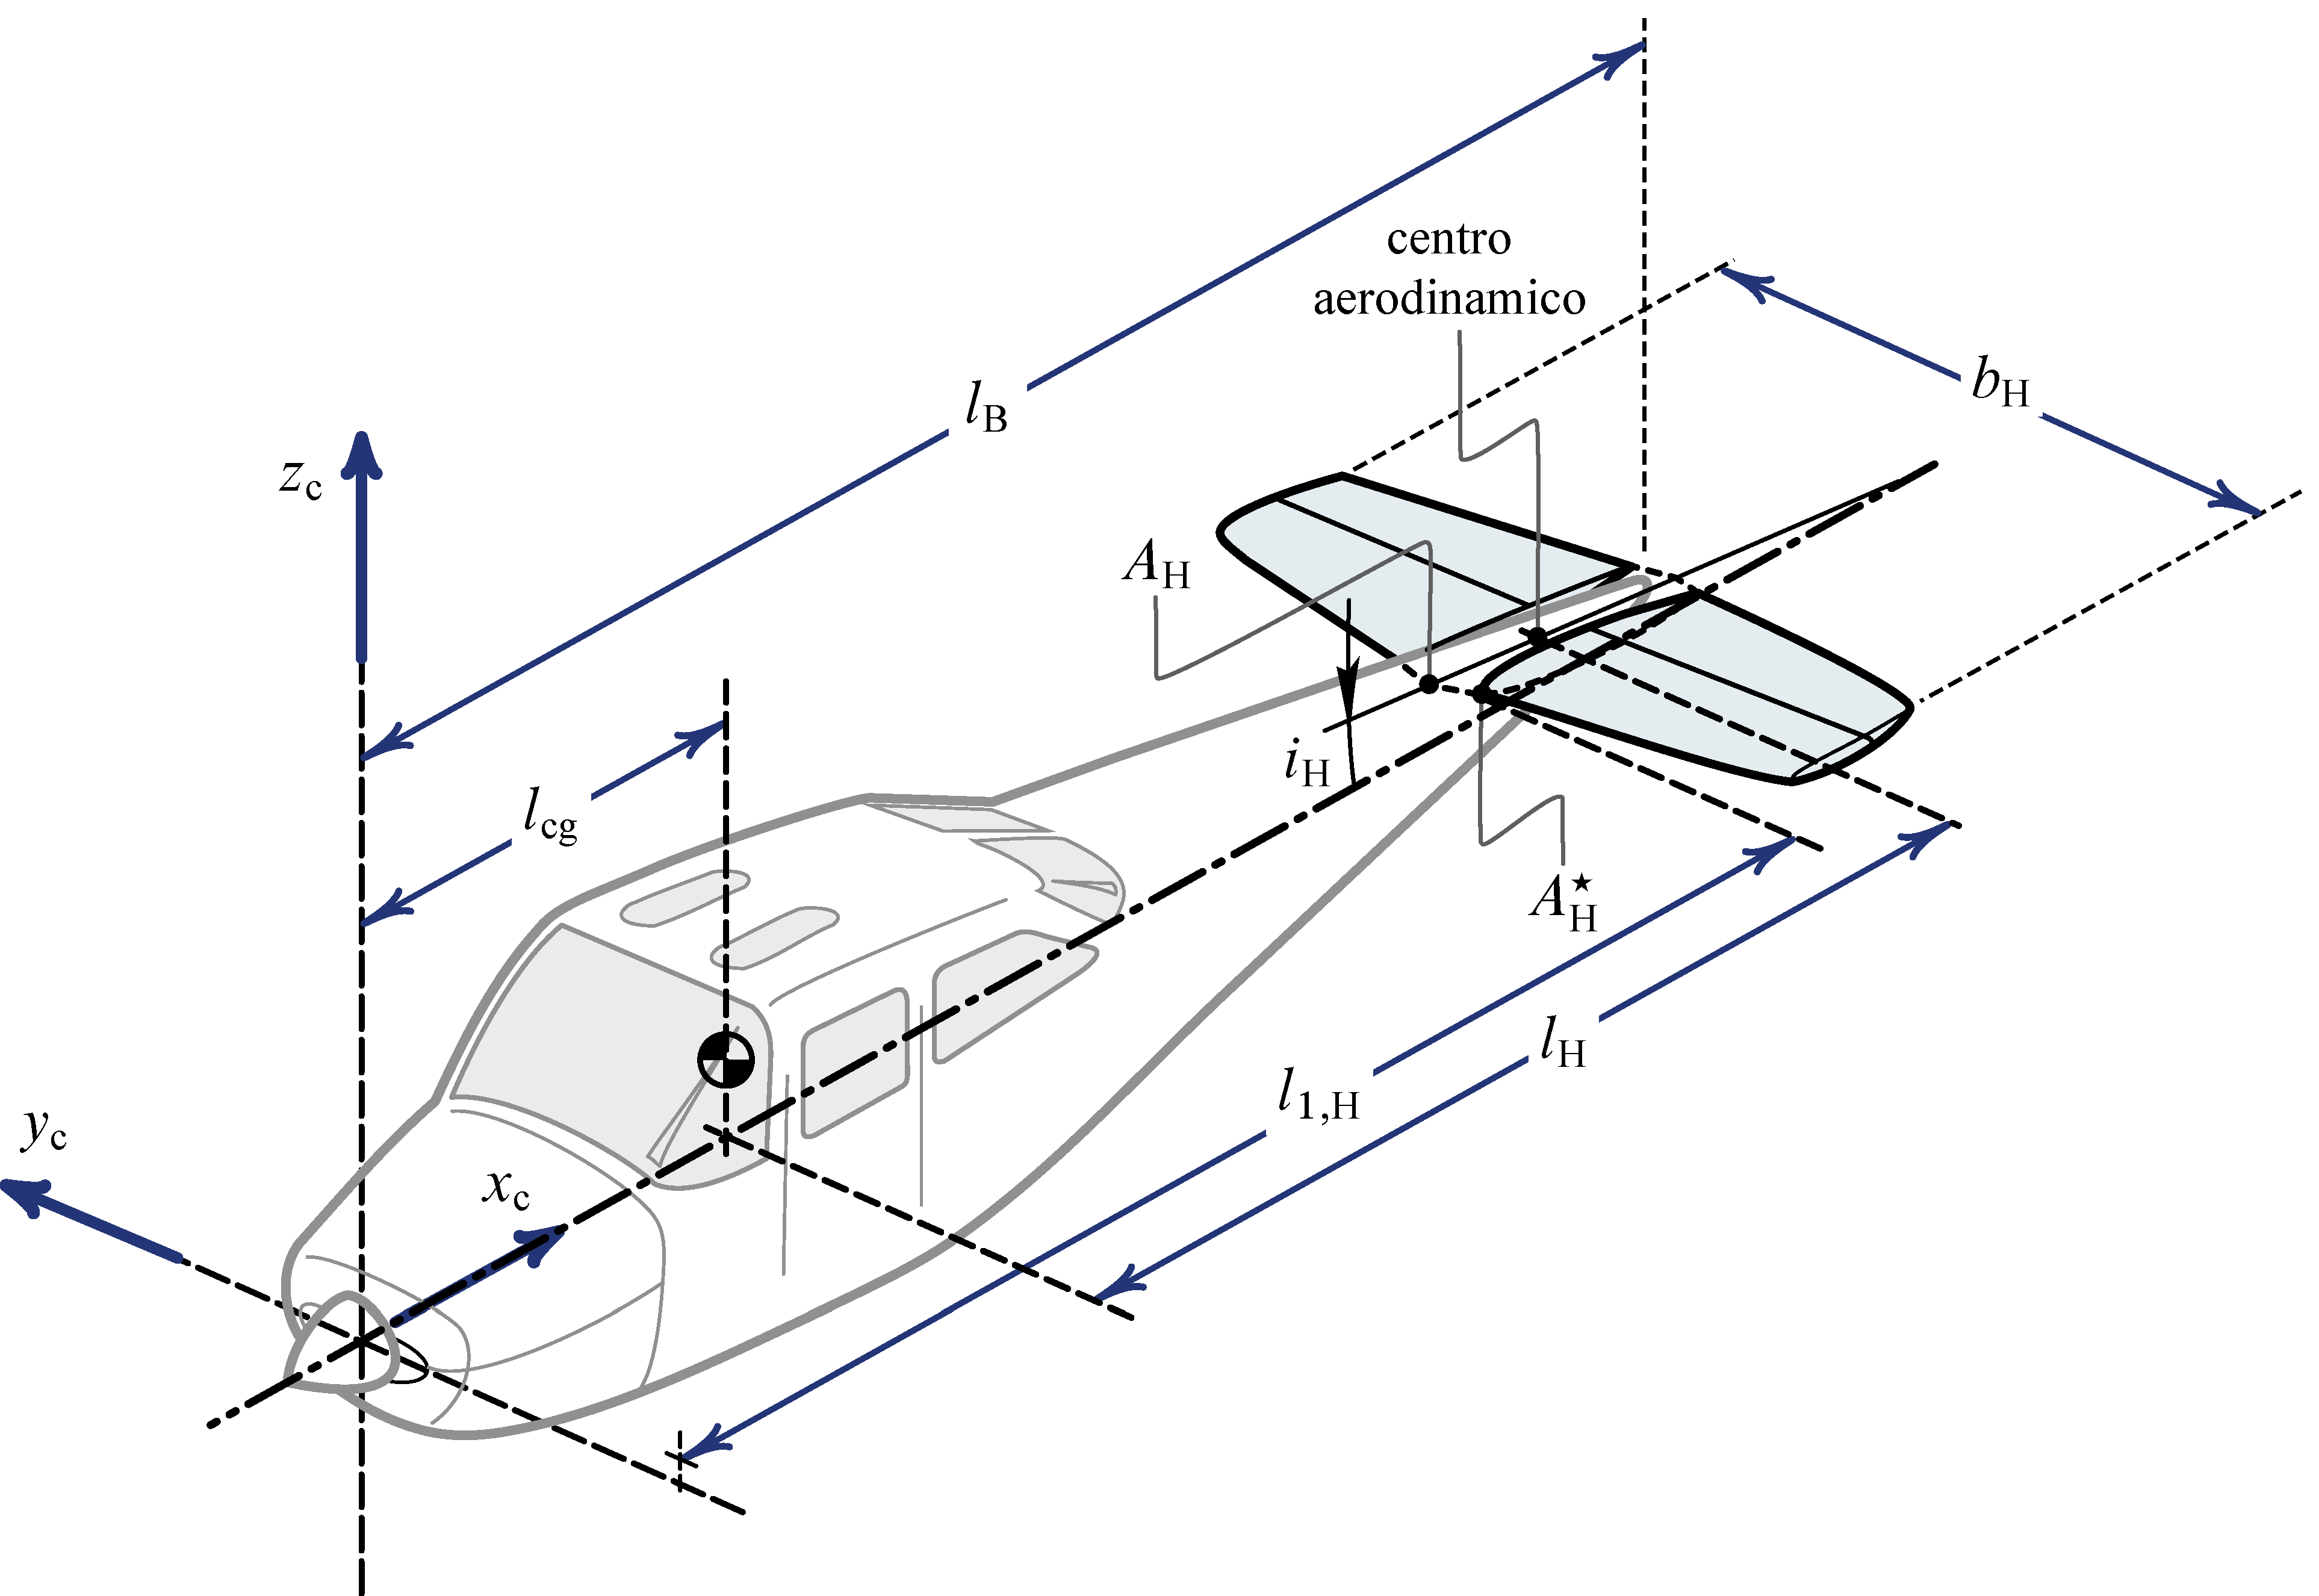 Nomenclature of the horizontal tailplane.